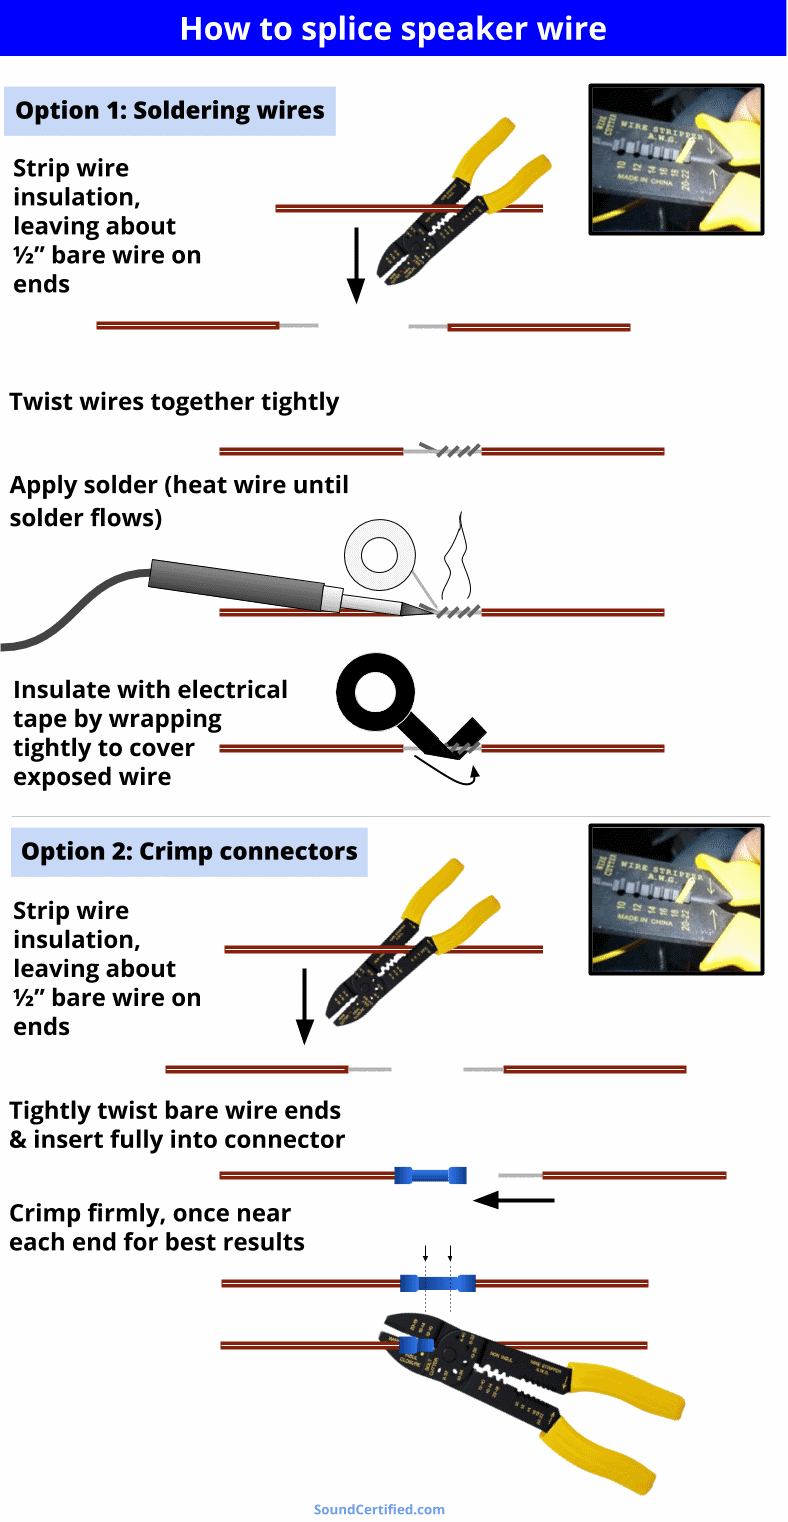 How to splice speaker wire diagram